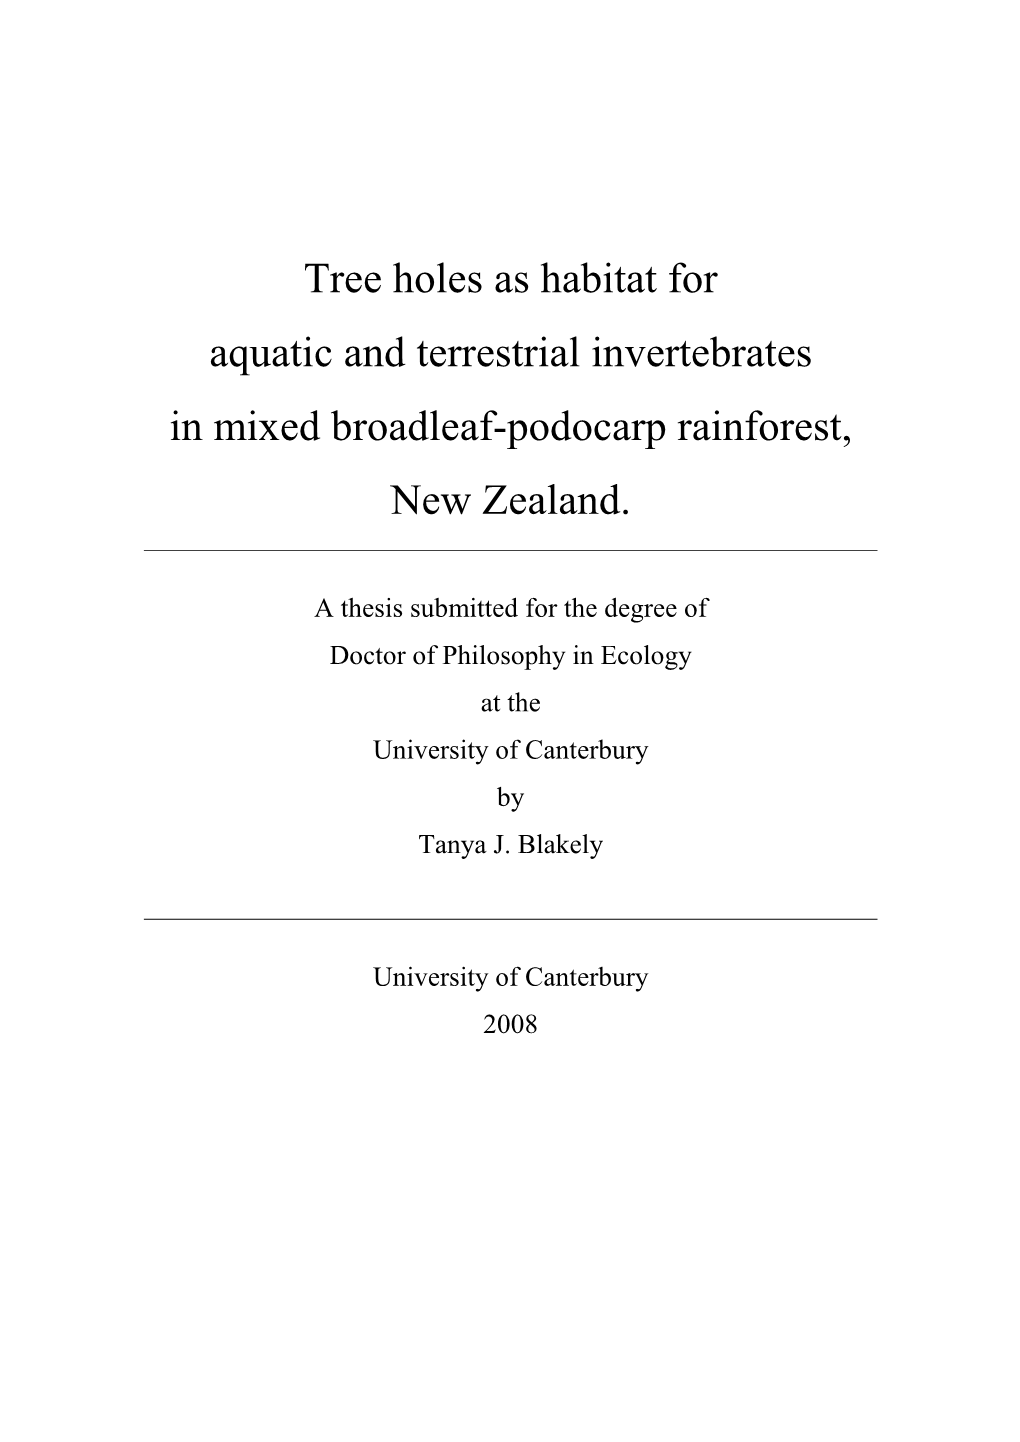 Tree Holes As Habitat for Aquatic and Terrestrial Invertebrates in Mixed Broadleaf�Podocarp Rainforest, New Zealand